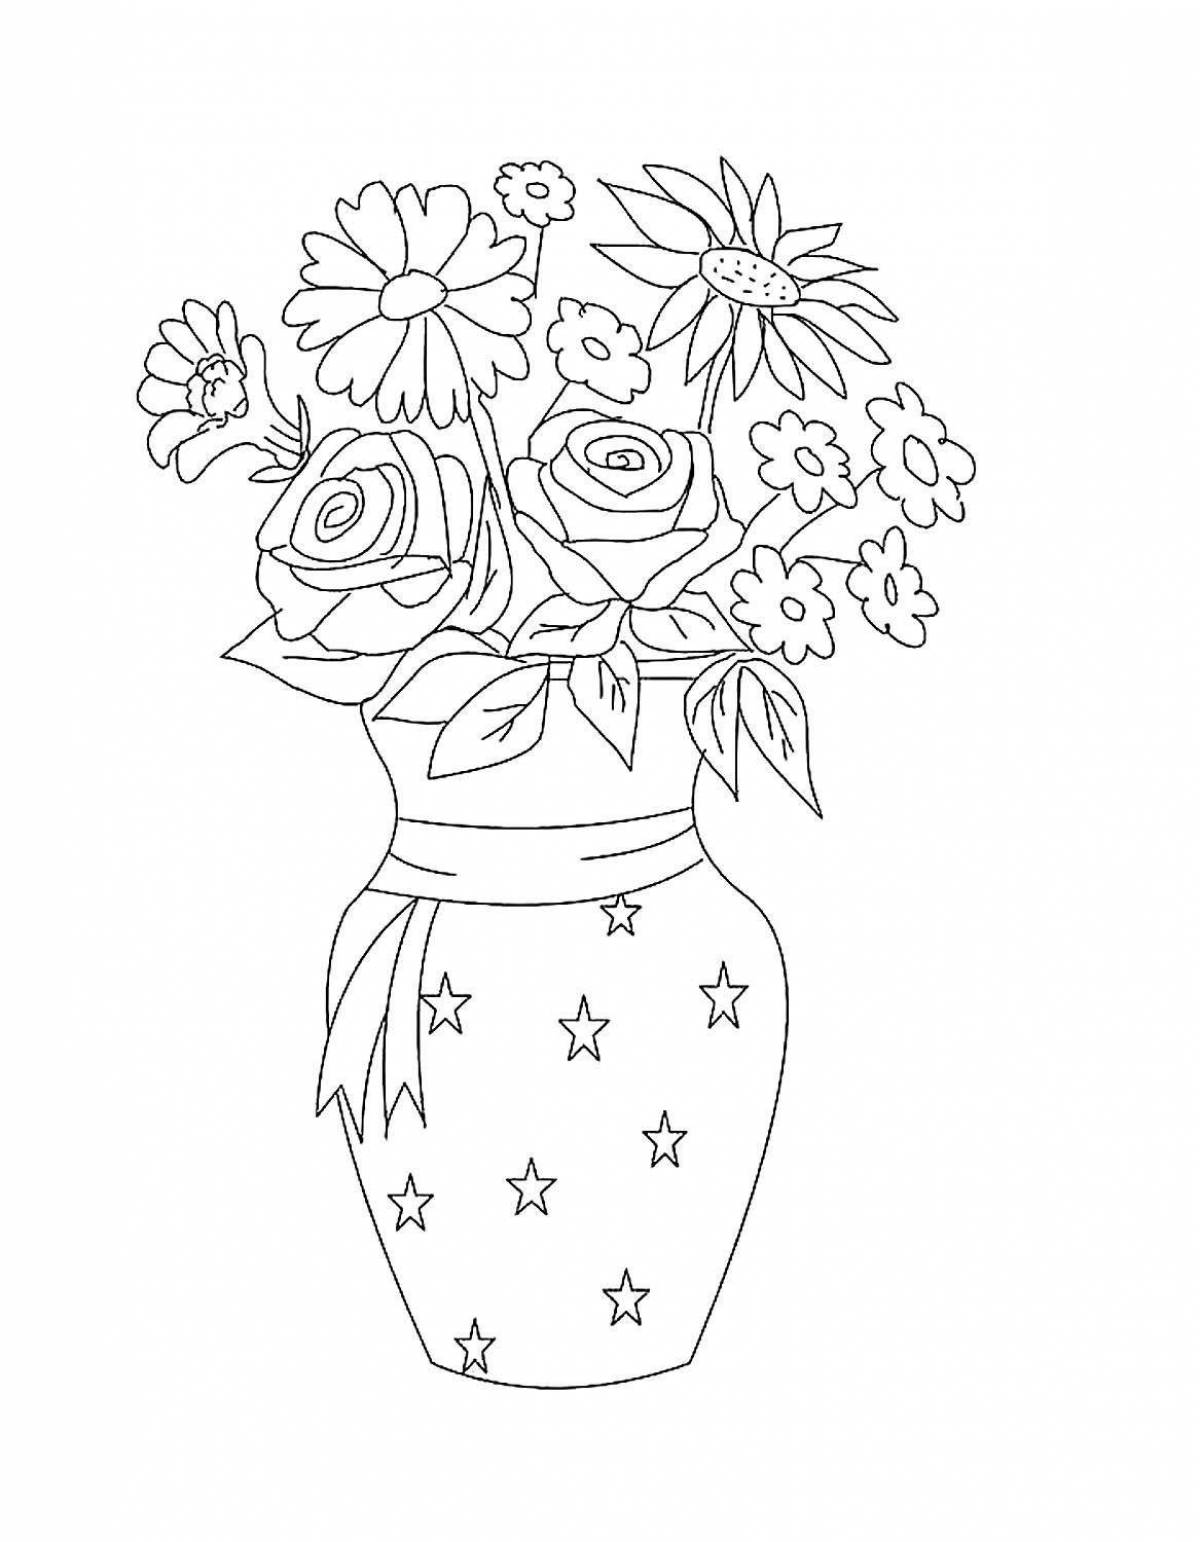 Joyful vase of flowers coloring book for children